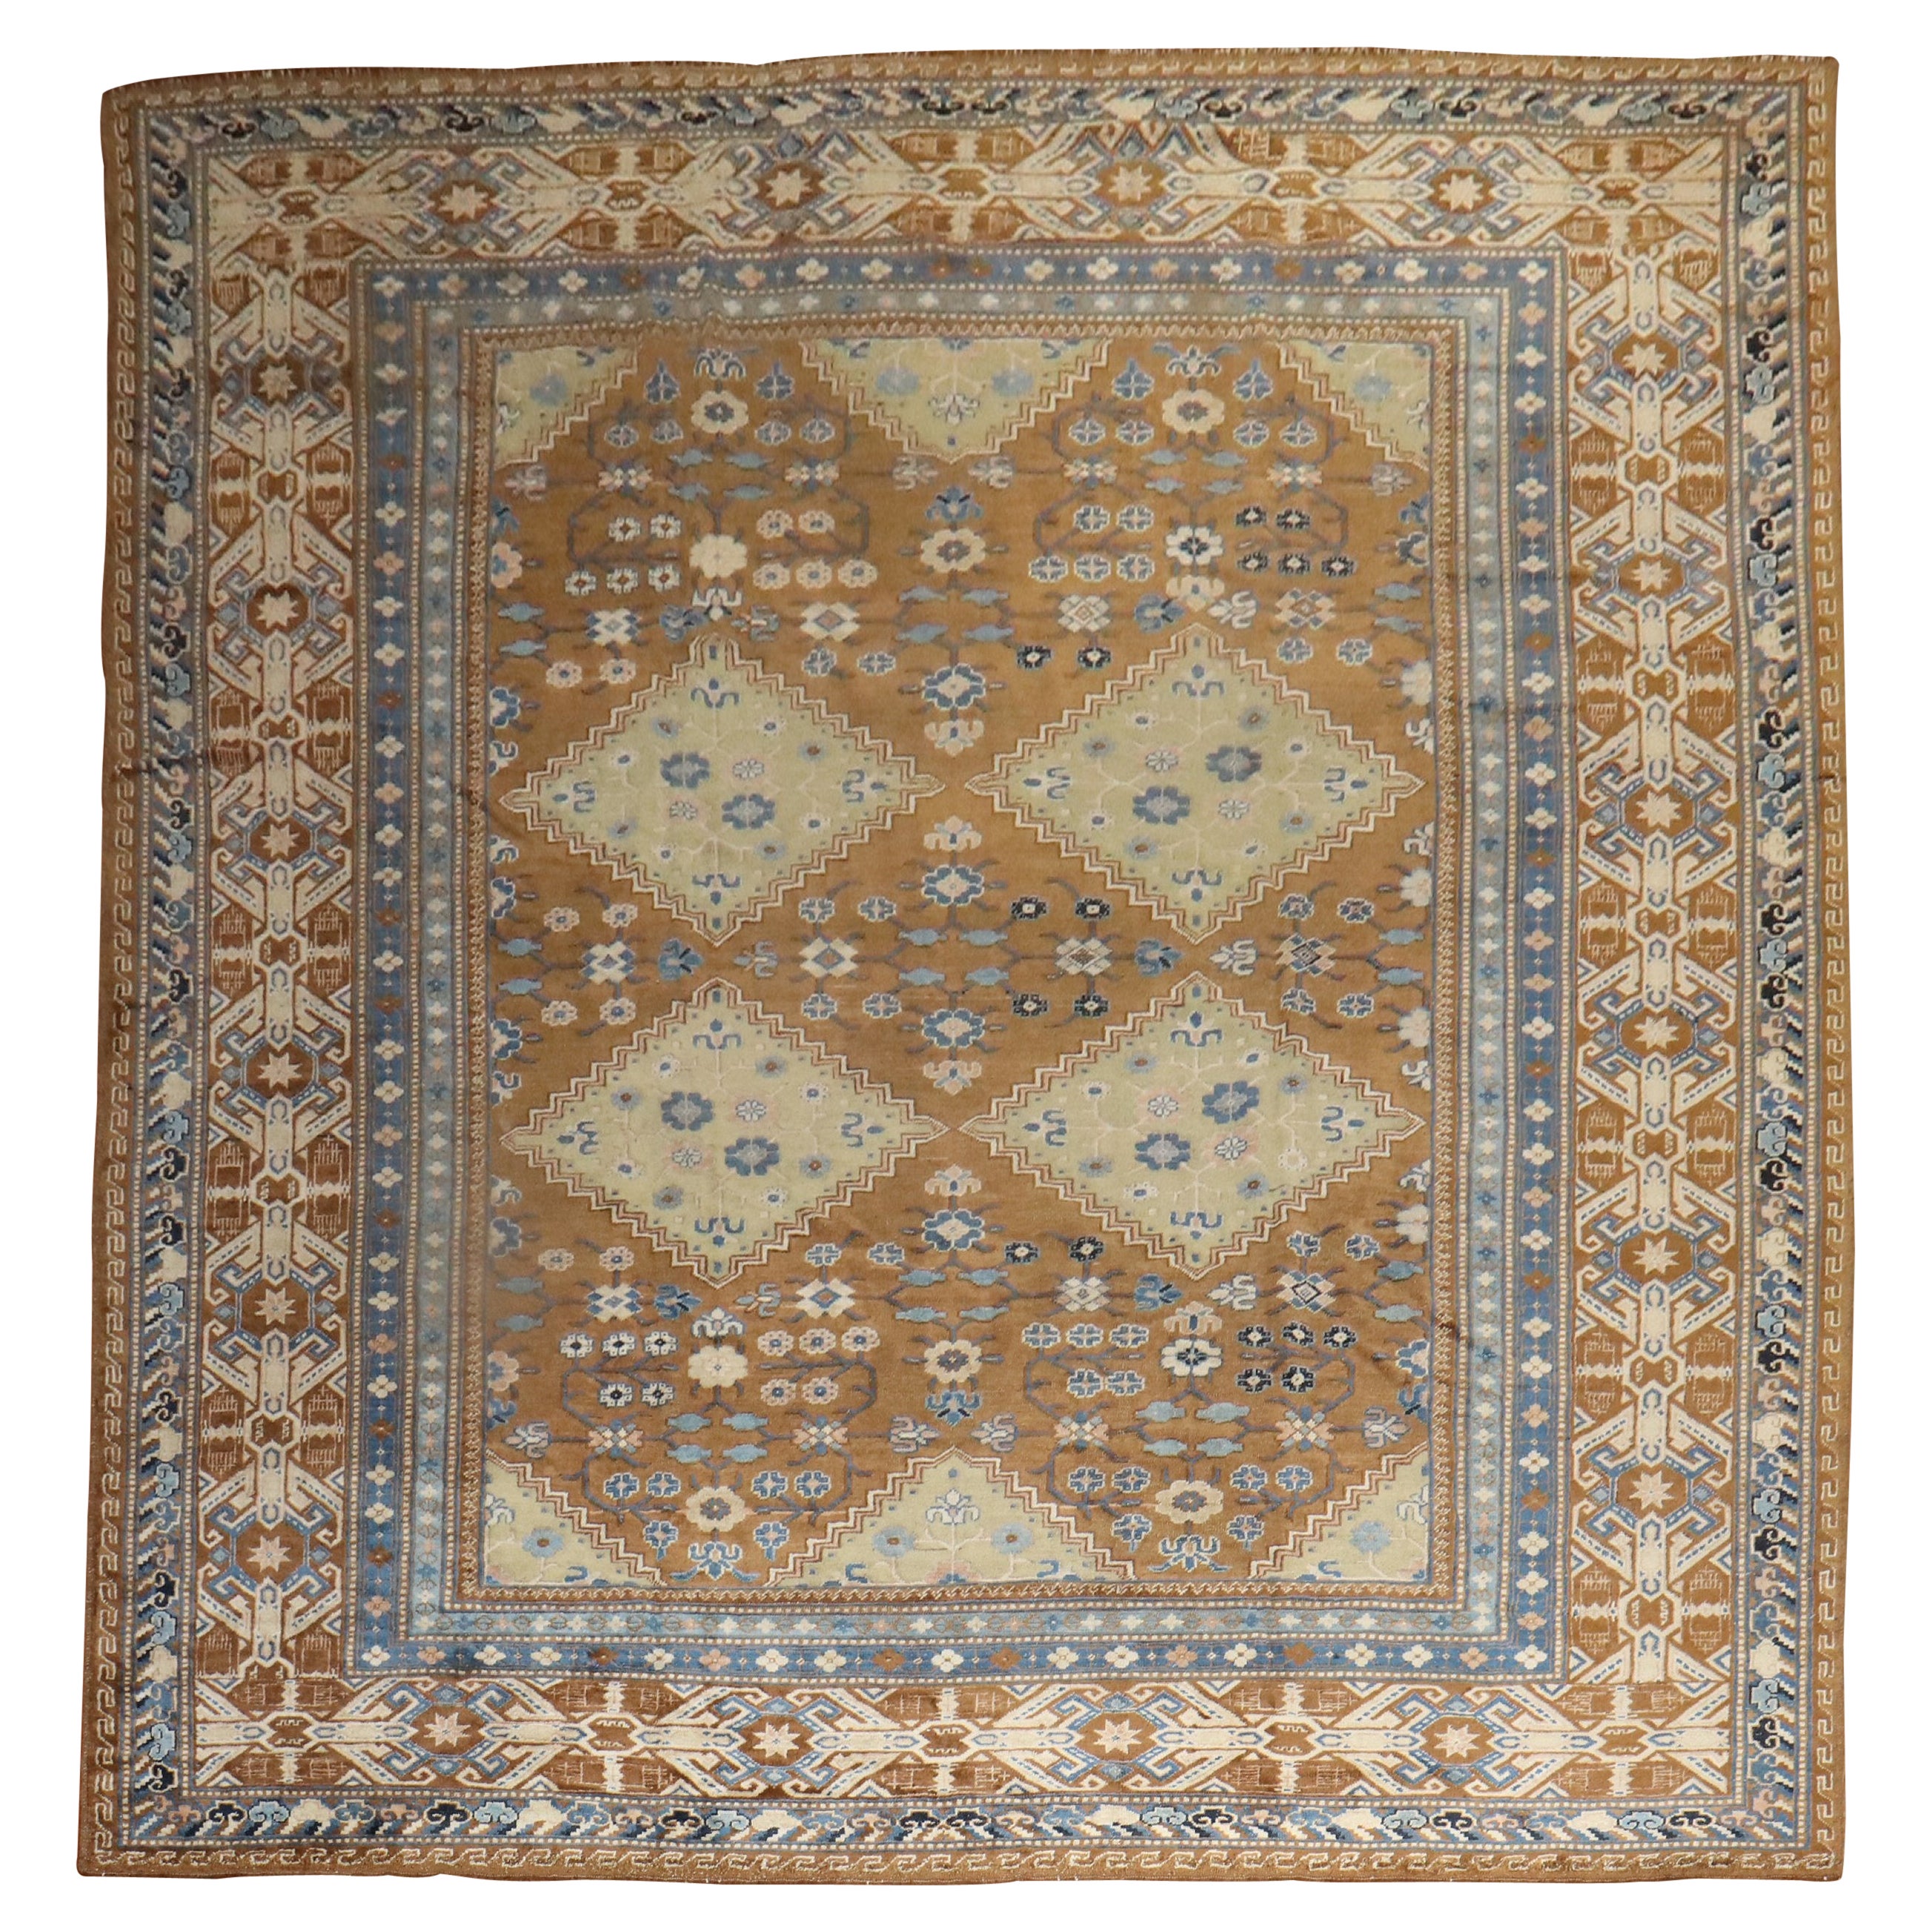 Großer antiker Khotan-Teppich